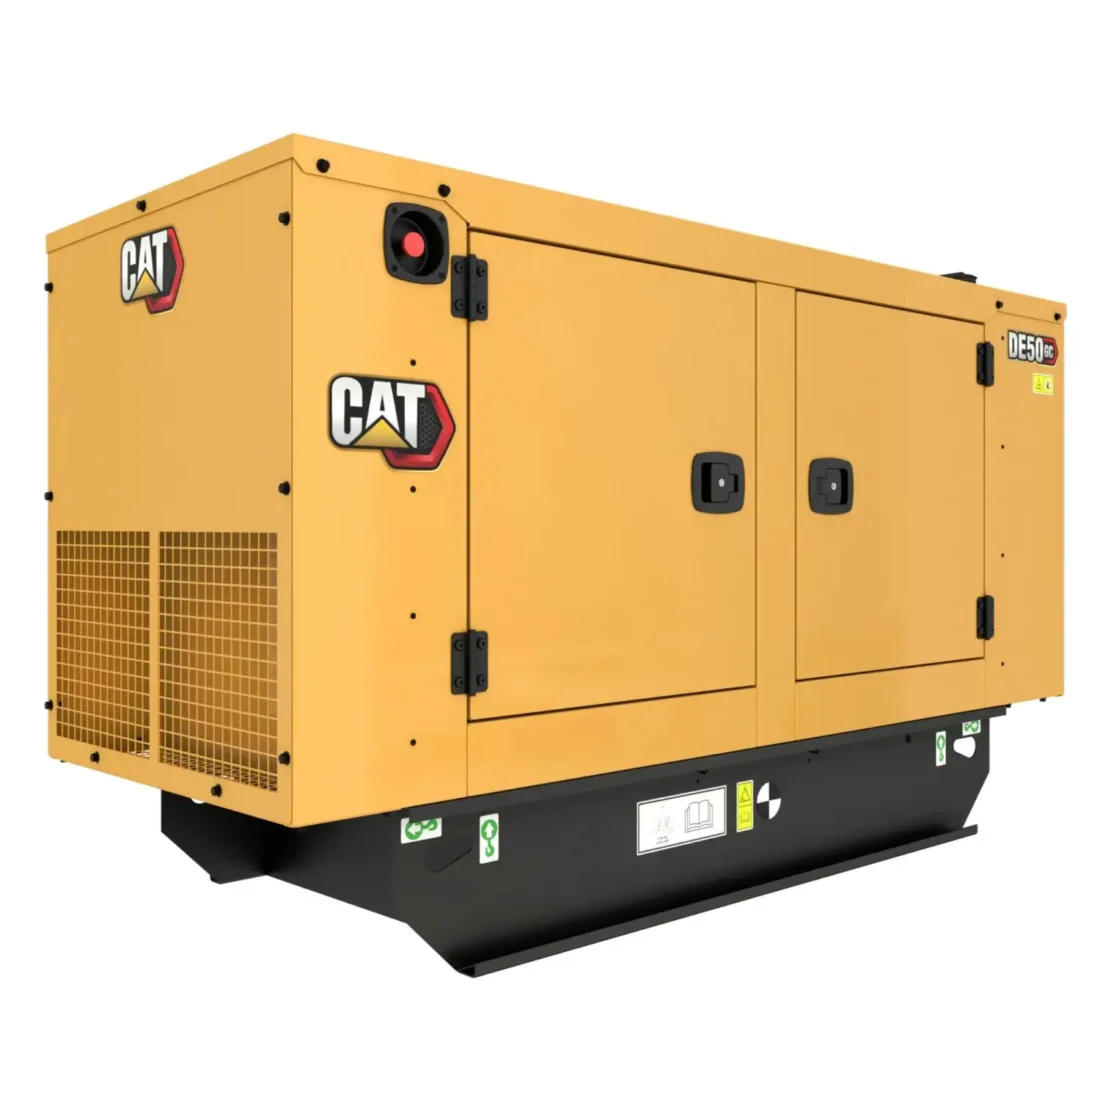 CAT DE50 GC 50kVA Diesel Generator